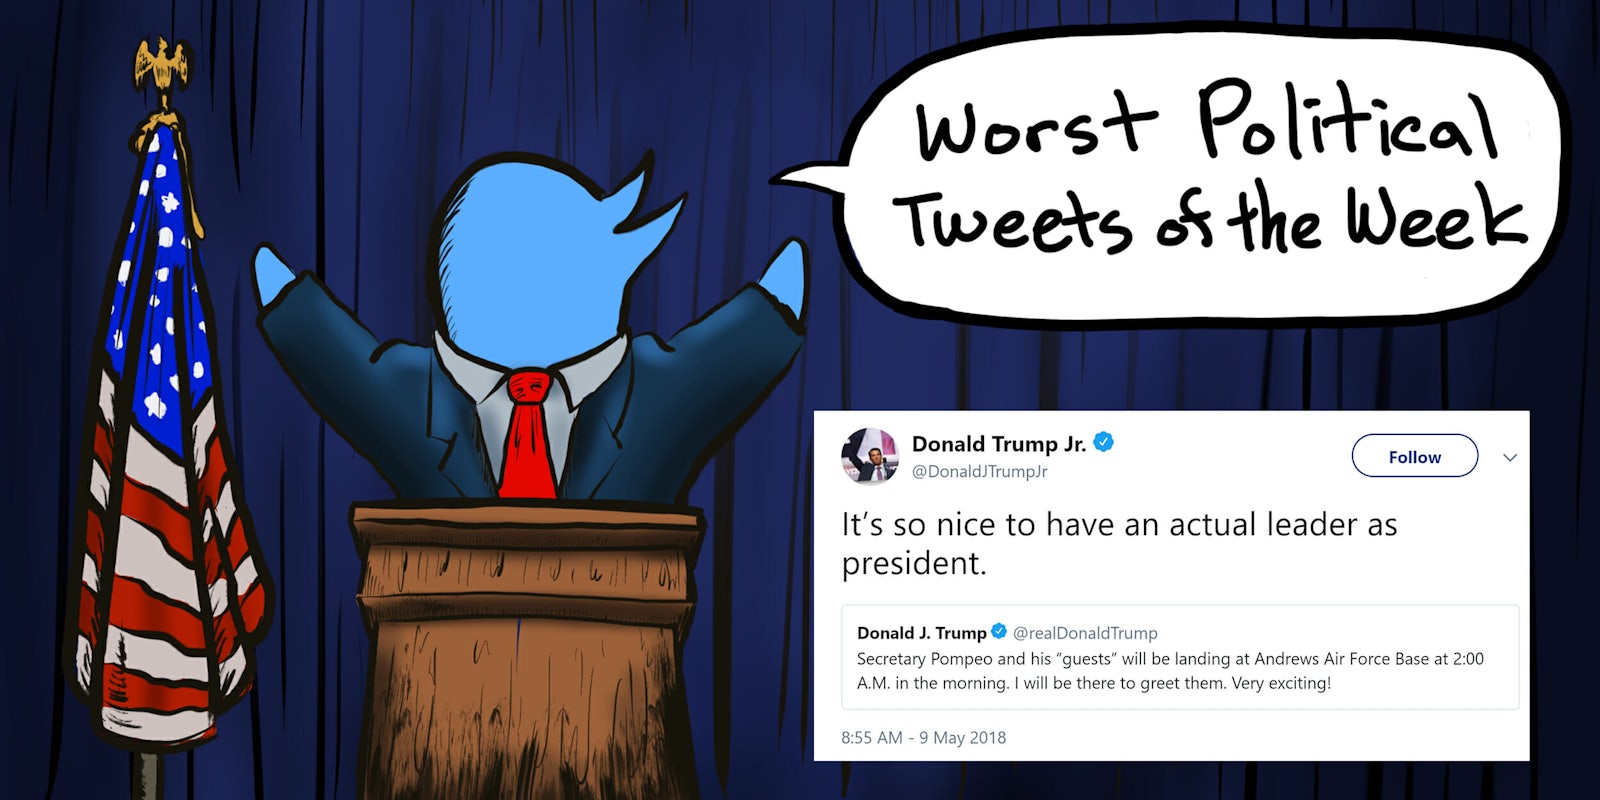 Worst Politics Tweets of the Week - Donald Trump Jr